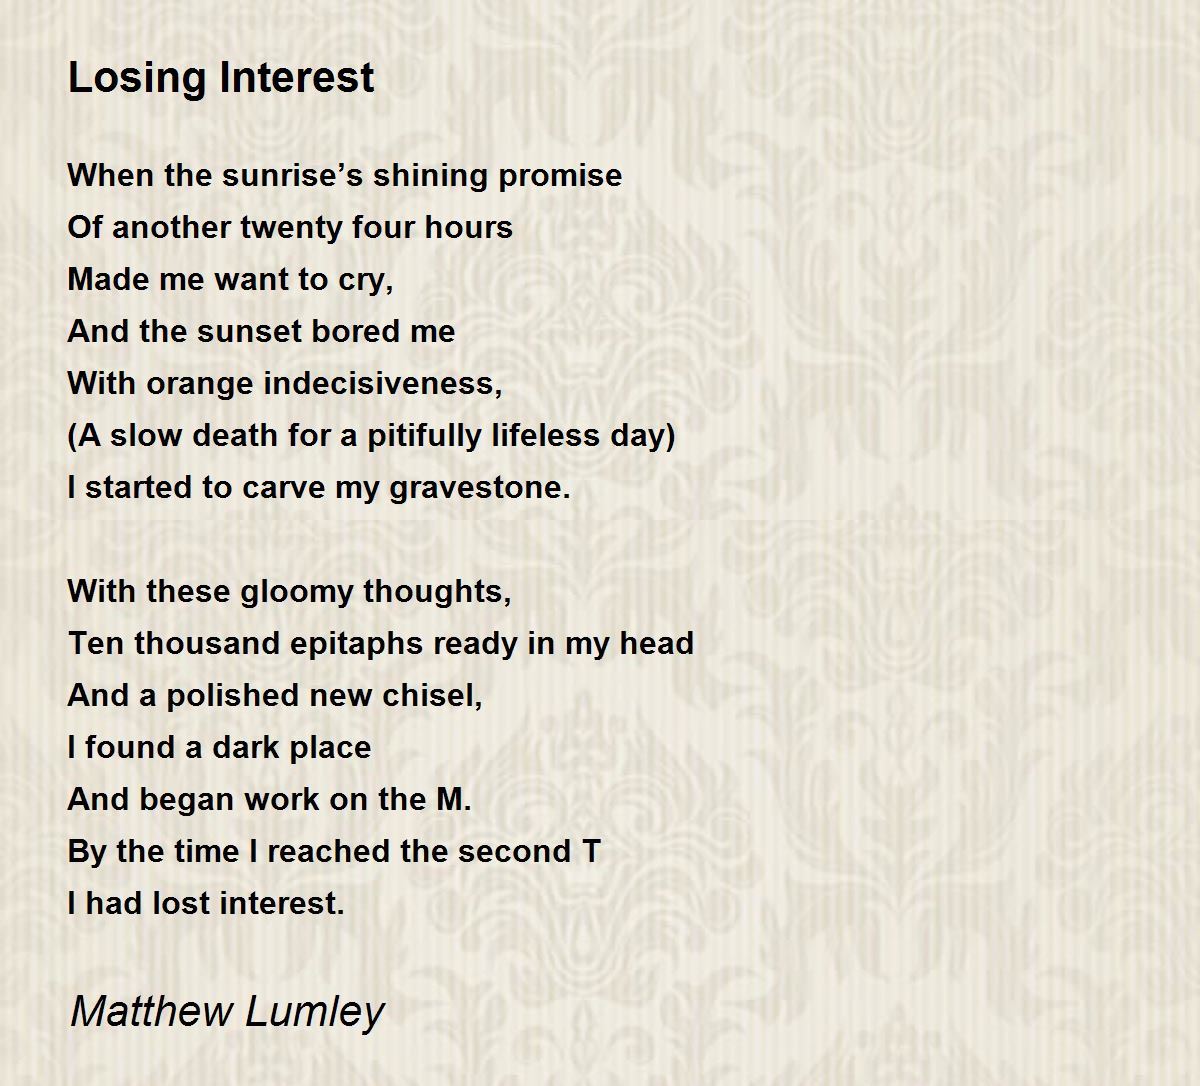 Losing Interest - Losing Interest Poem by Matthew Lumley